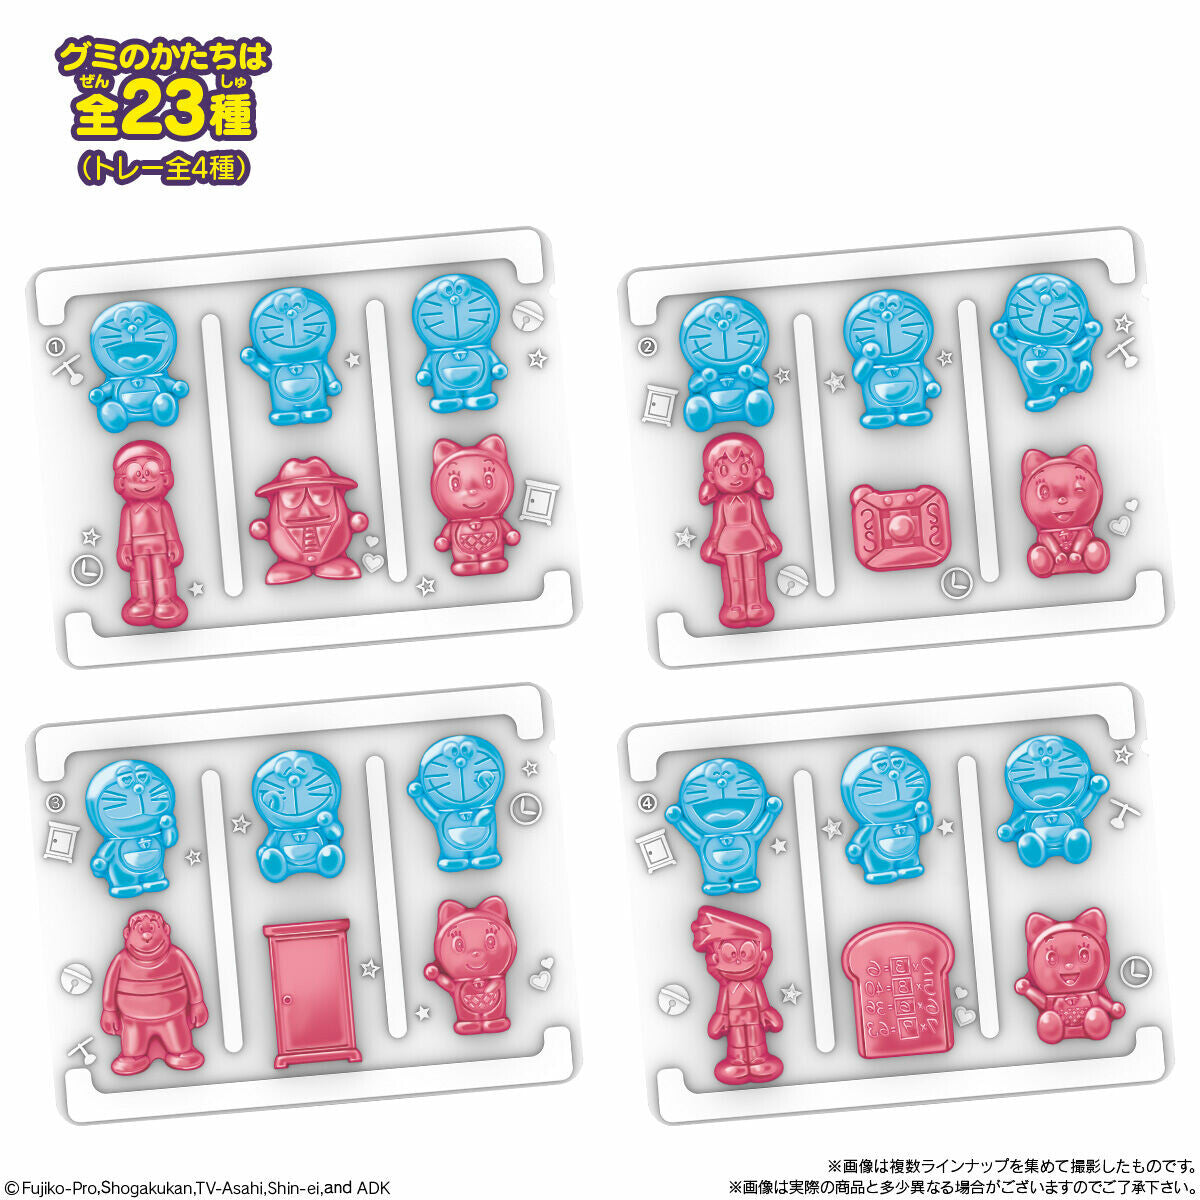 Bandai Doraemon Gummy - Grape and Soda, 1 box (20 packs)